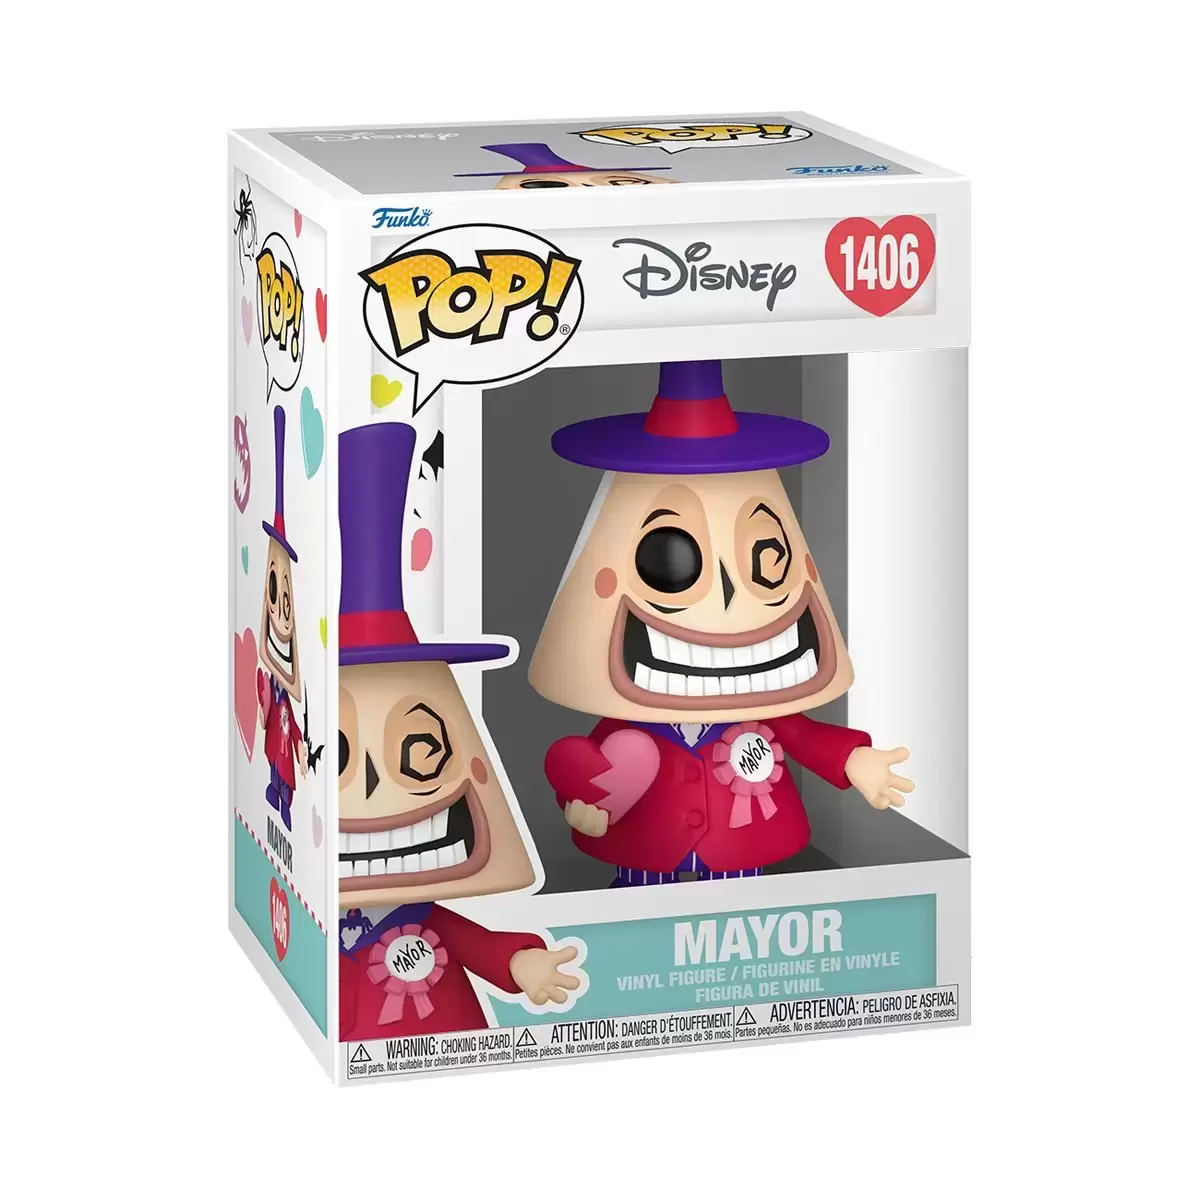 POP! Disney - The Nightmare Before Christmas - Mayor